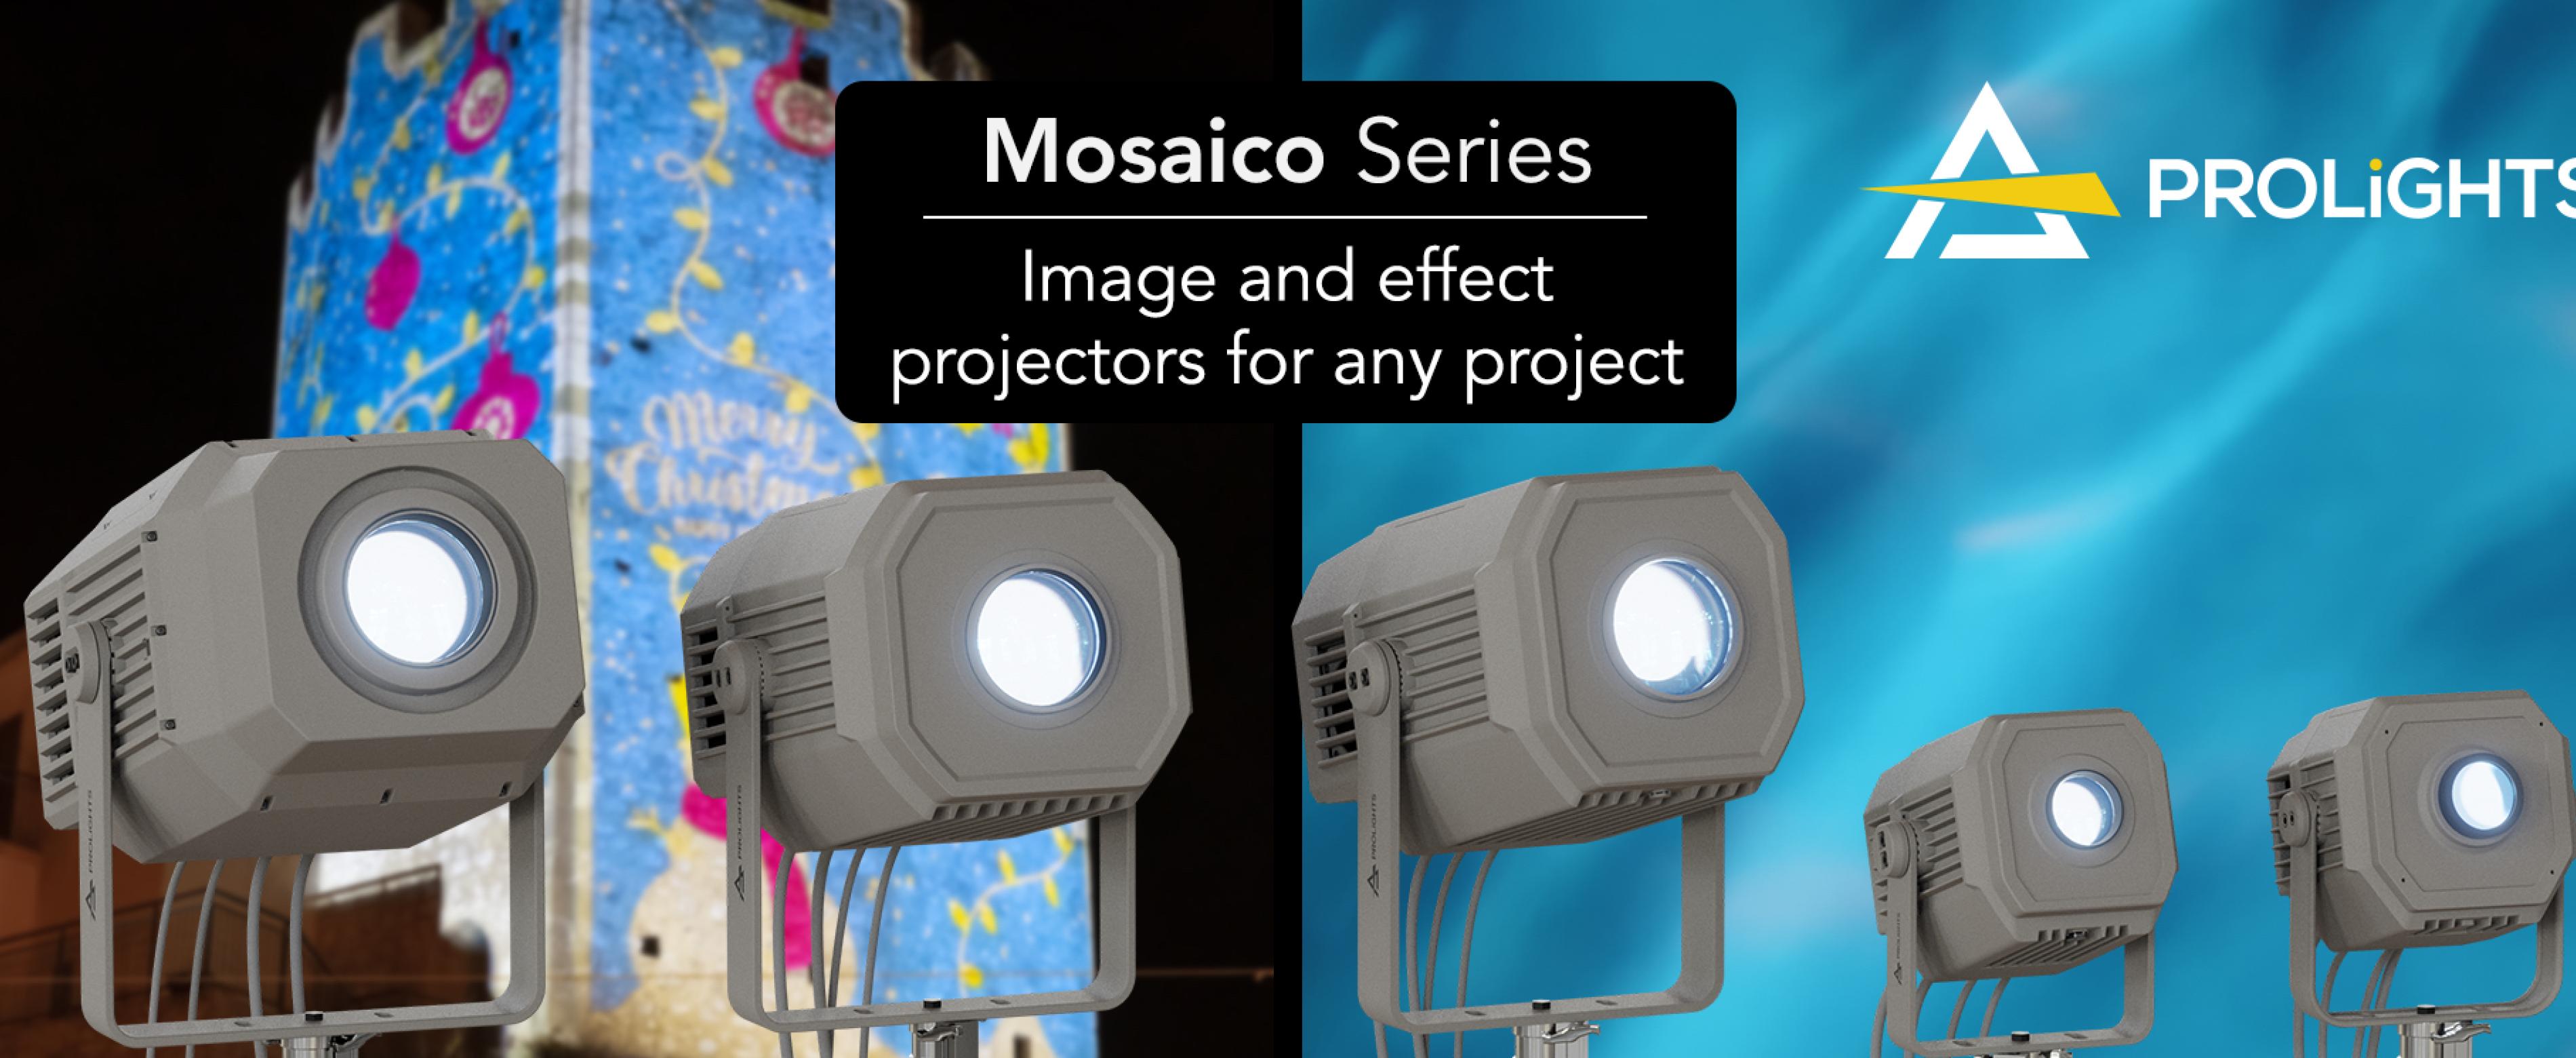 Mosaico series